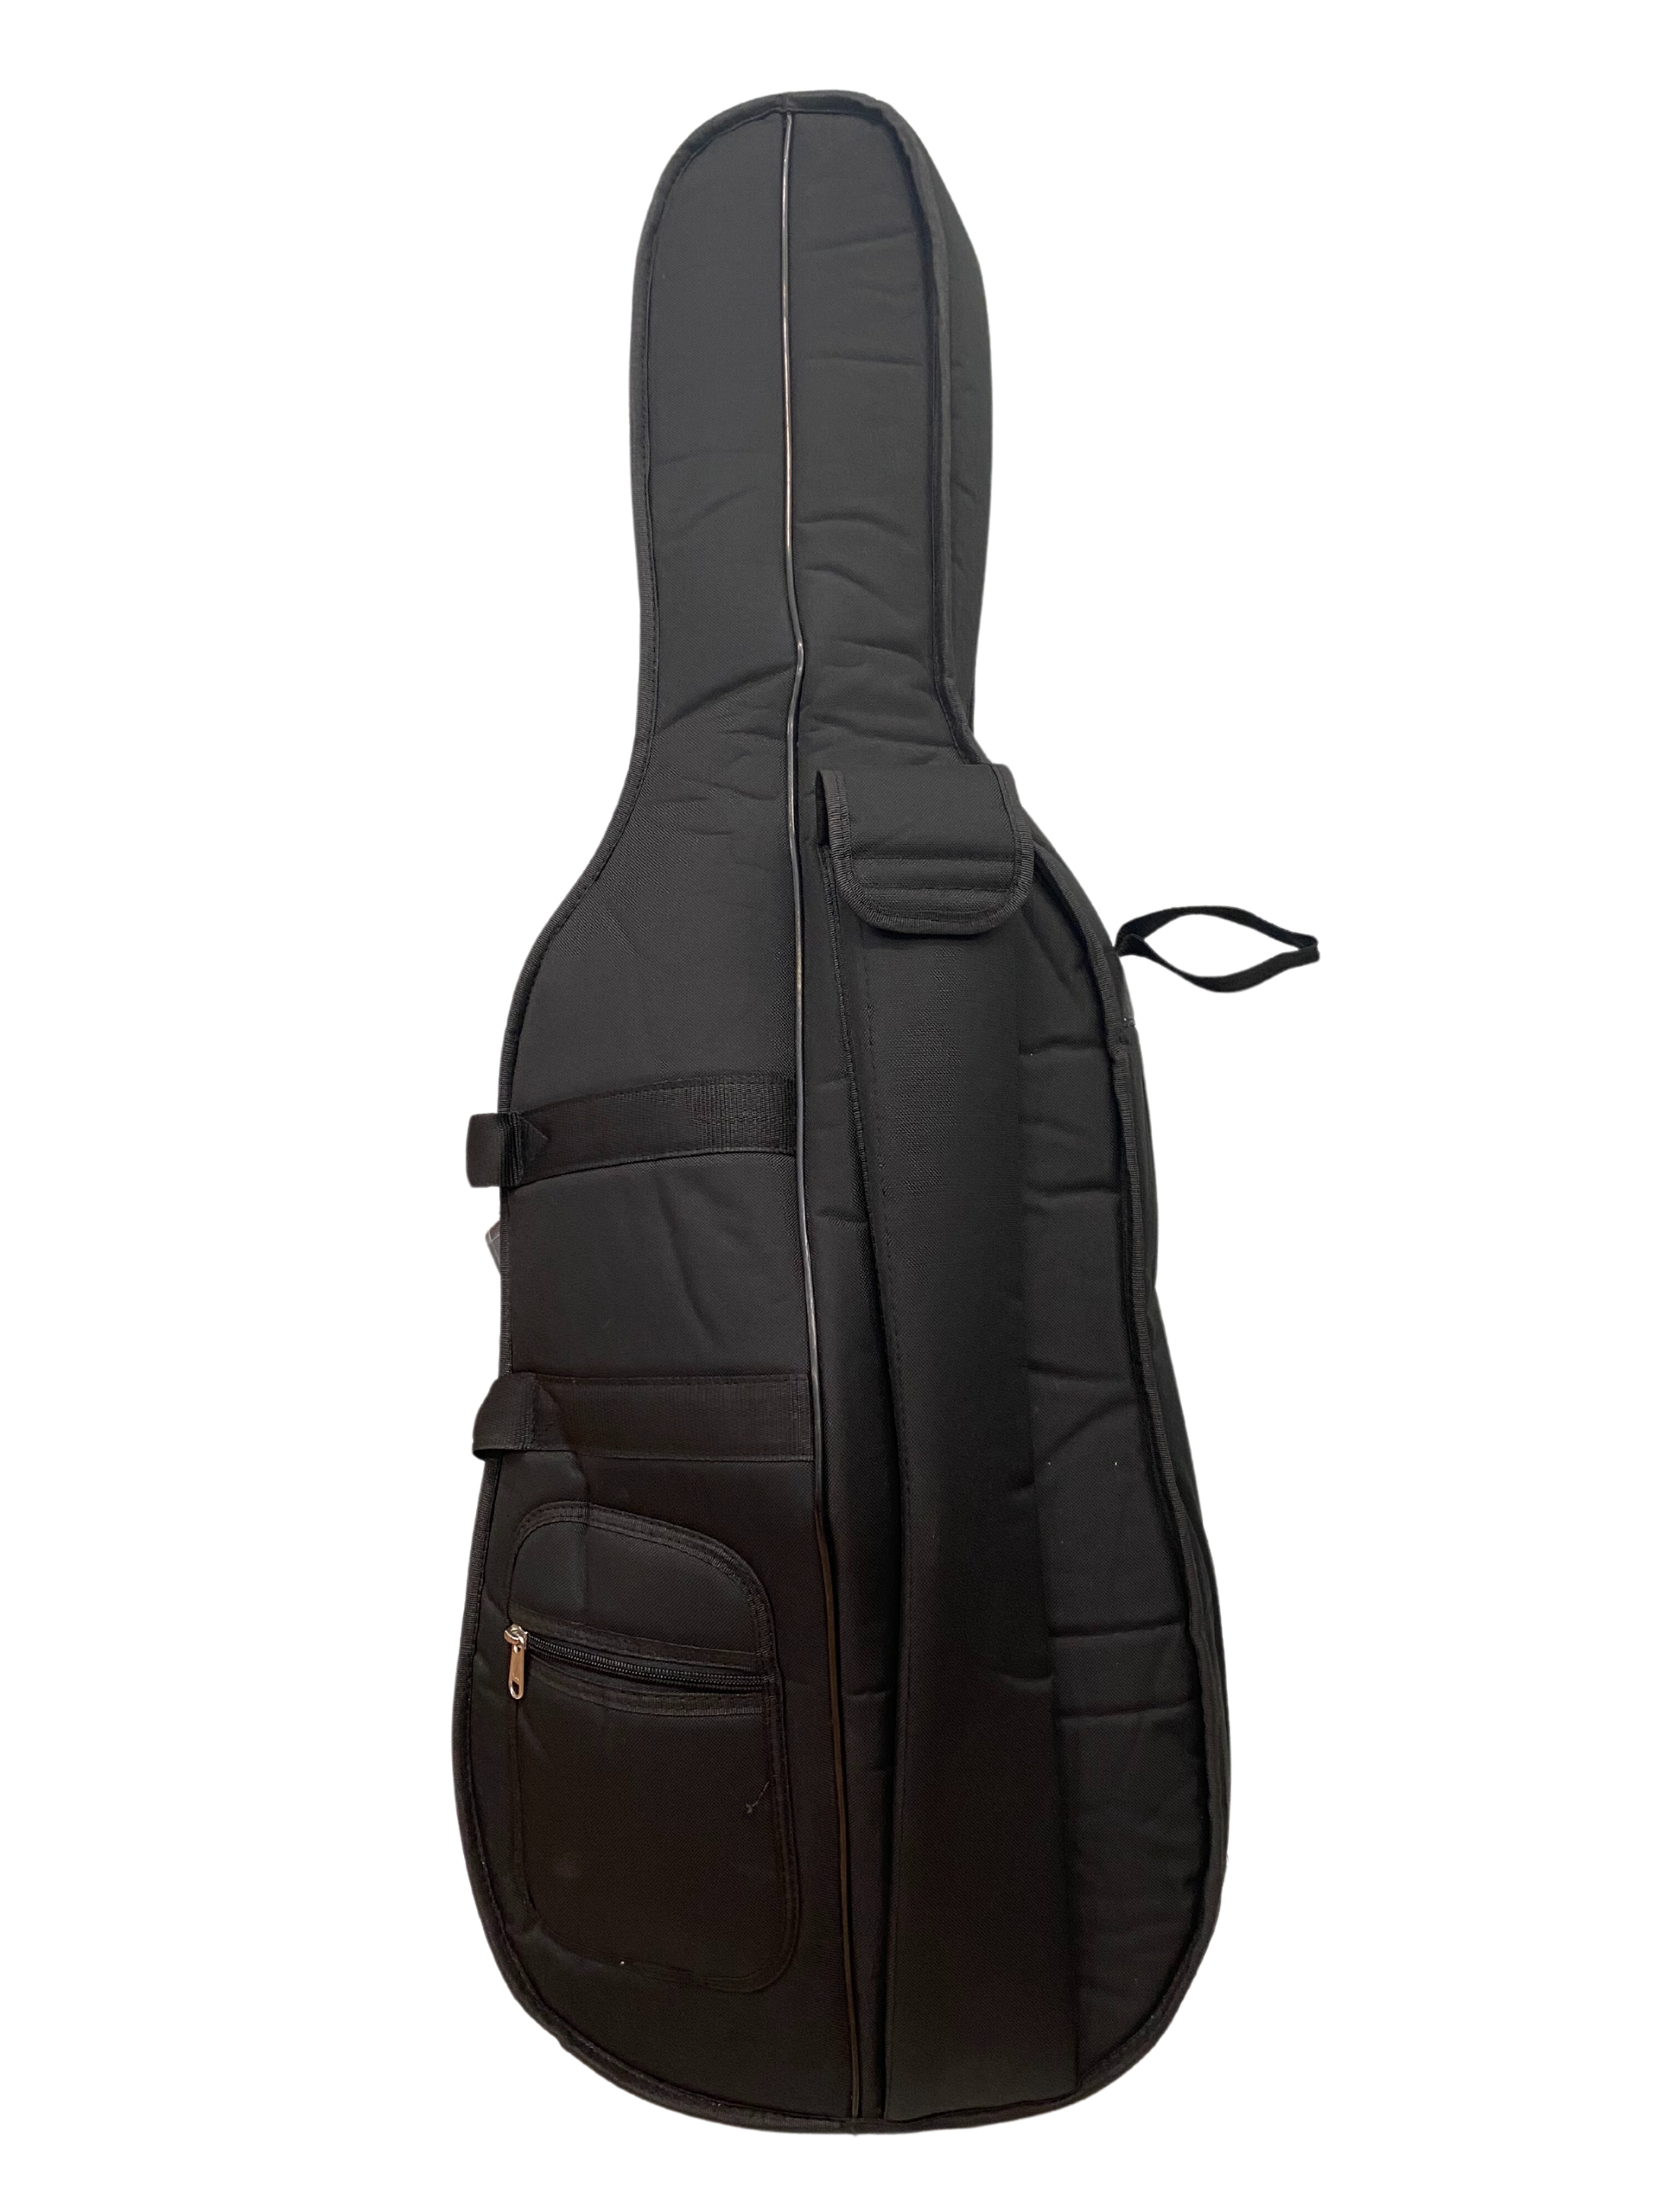 cello prodigy bag front